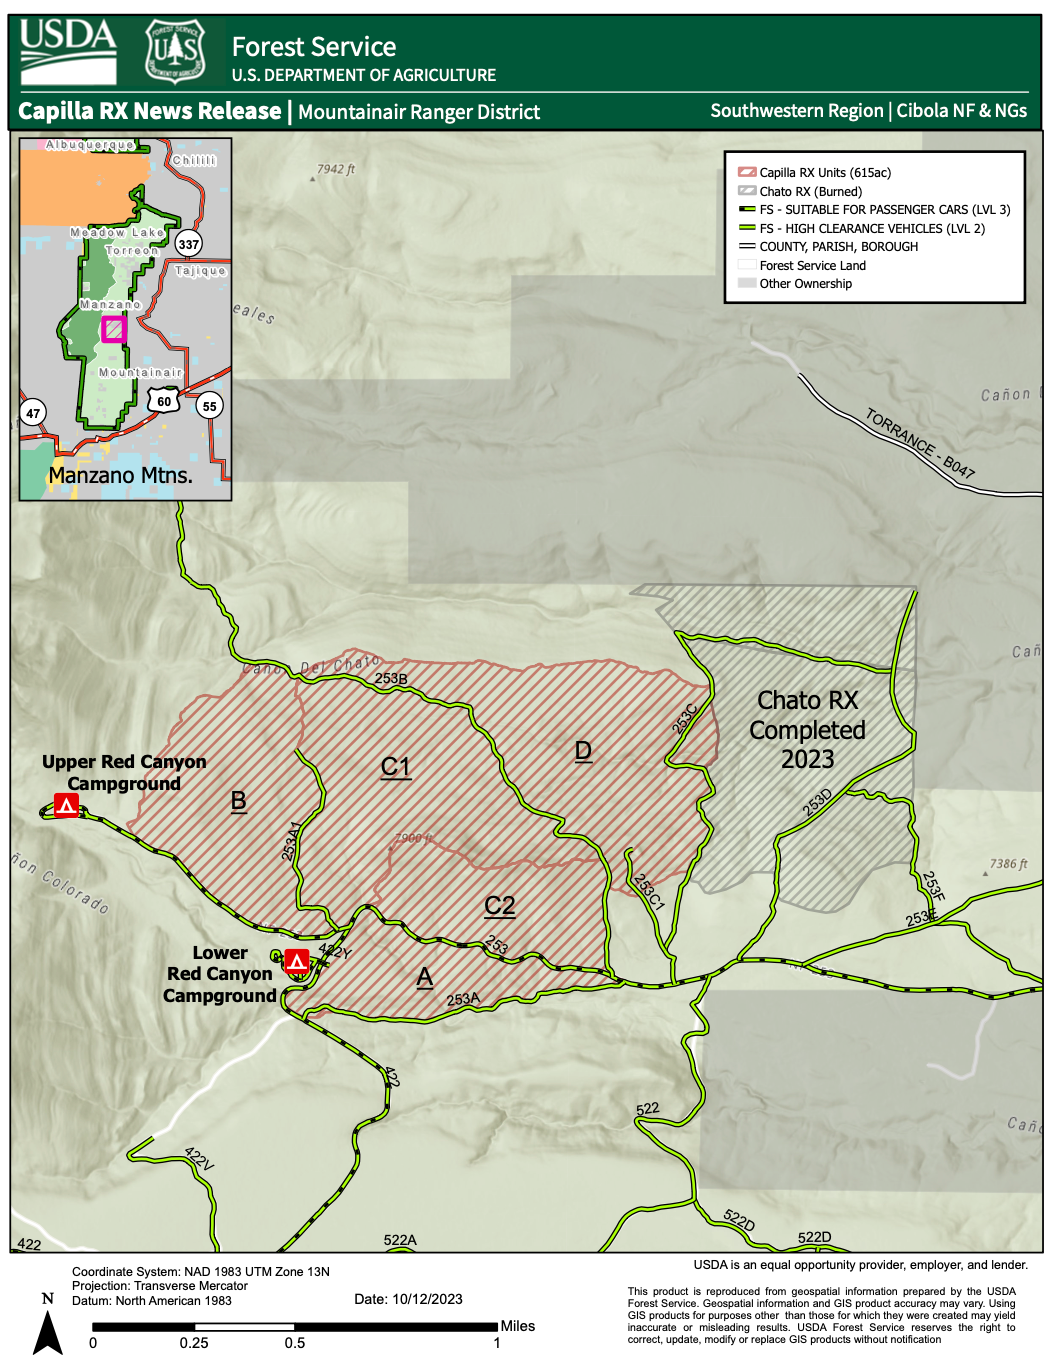 USFS Plans Prescribed Burn in Manzano Mountains